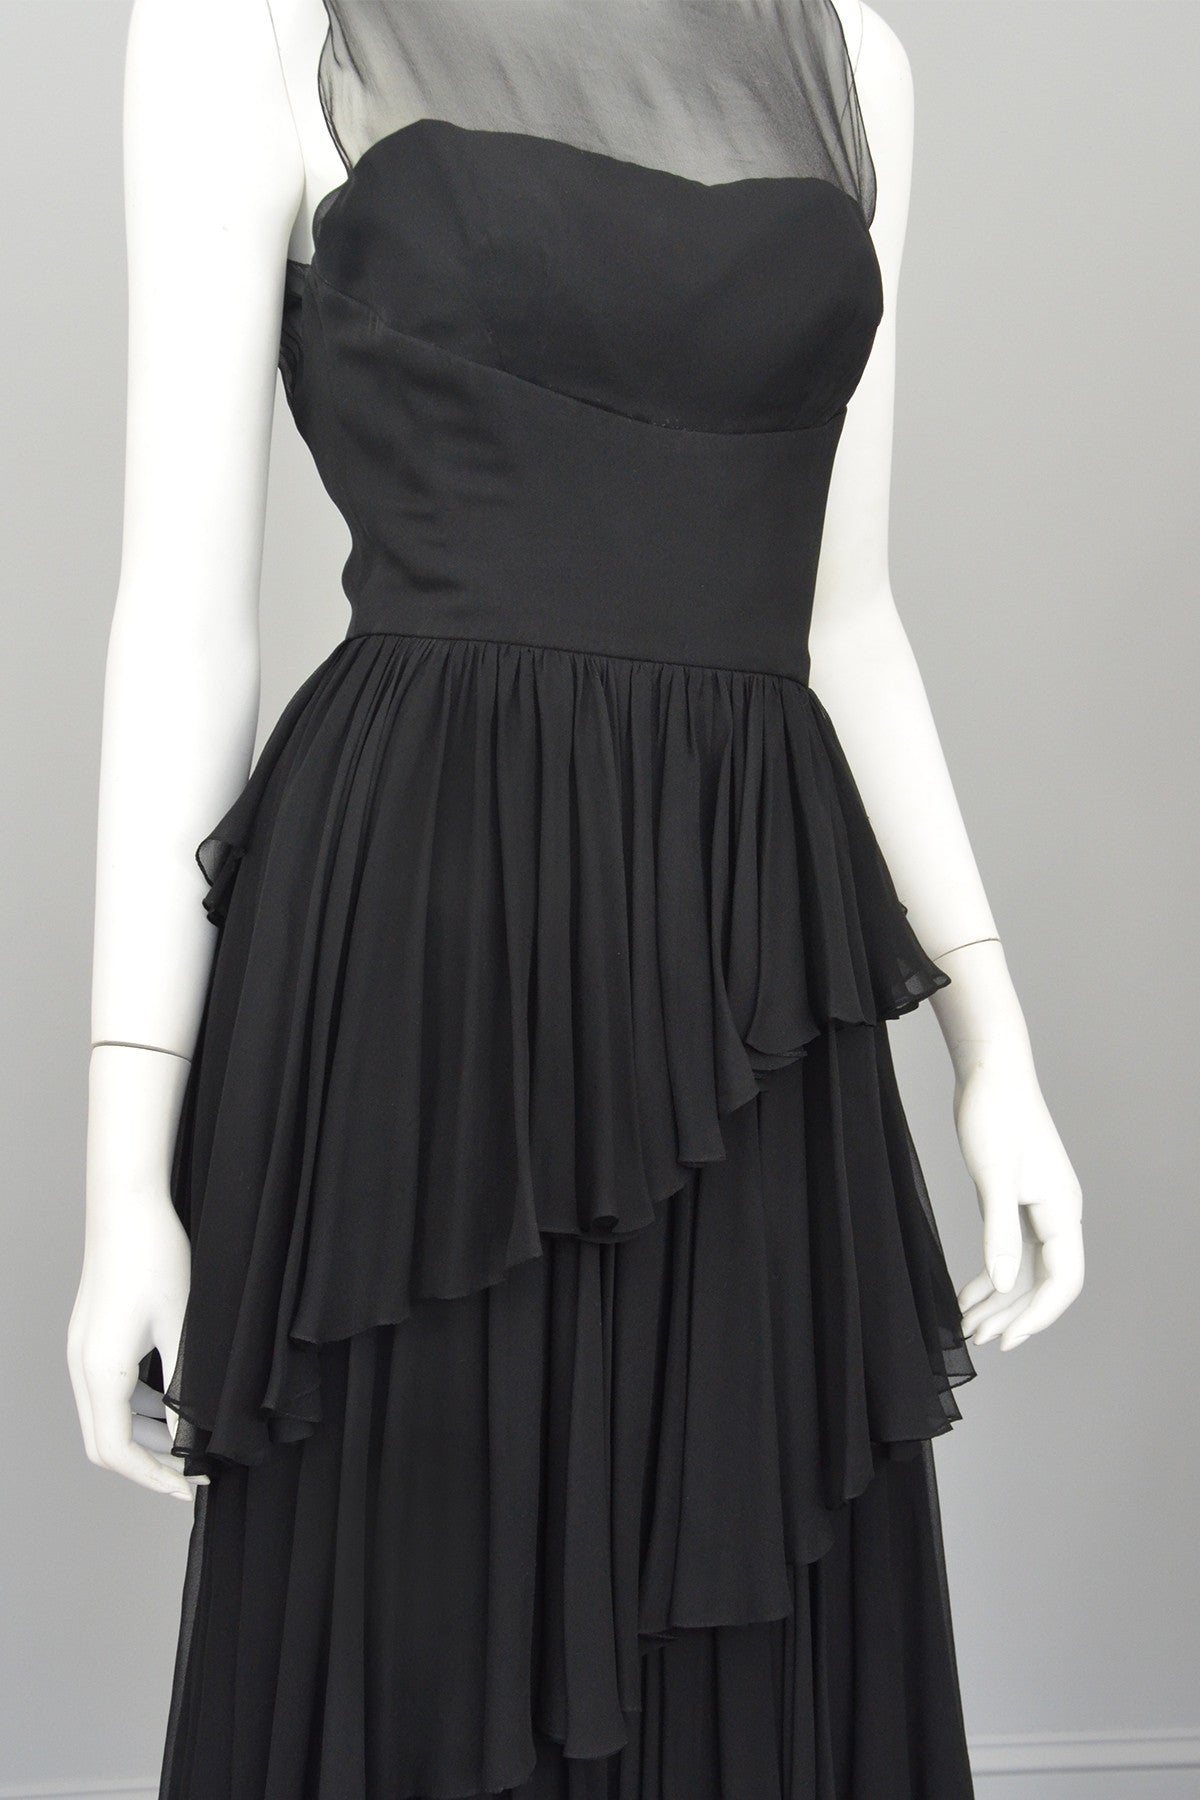 Vintage 1960s Black Chiffon Tiered Skirt Cocktail Dress